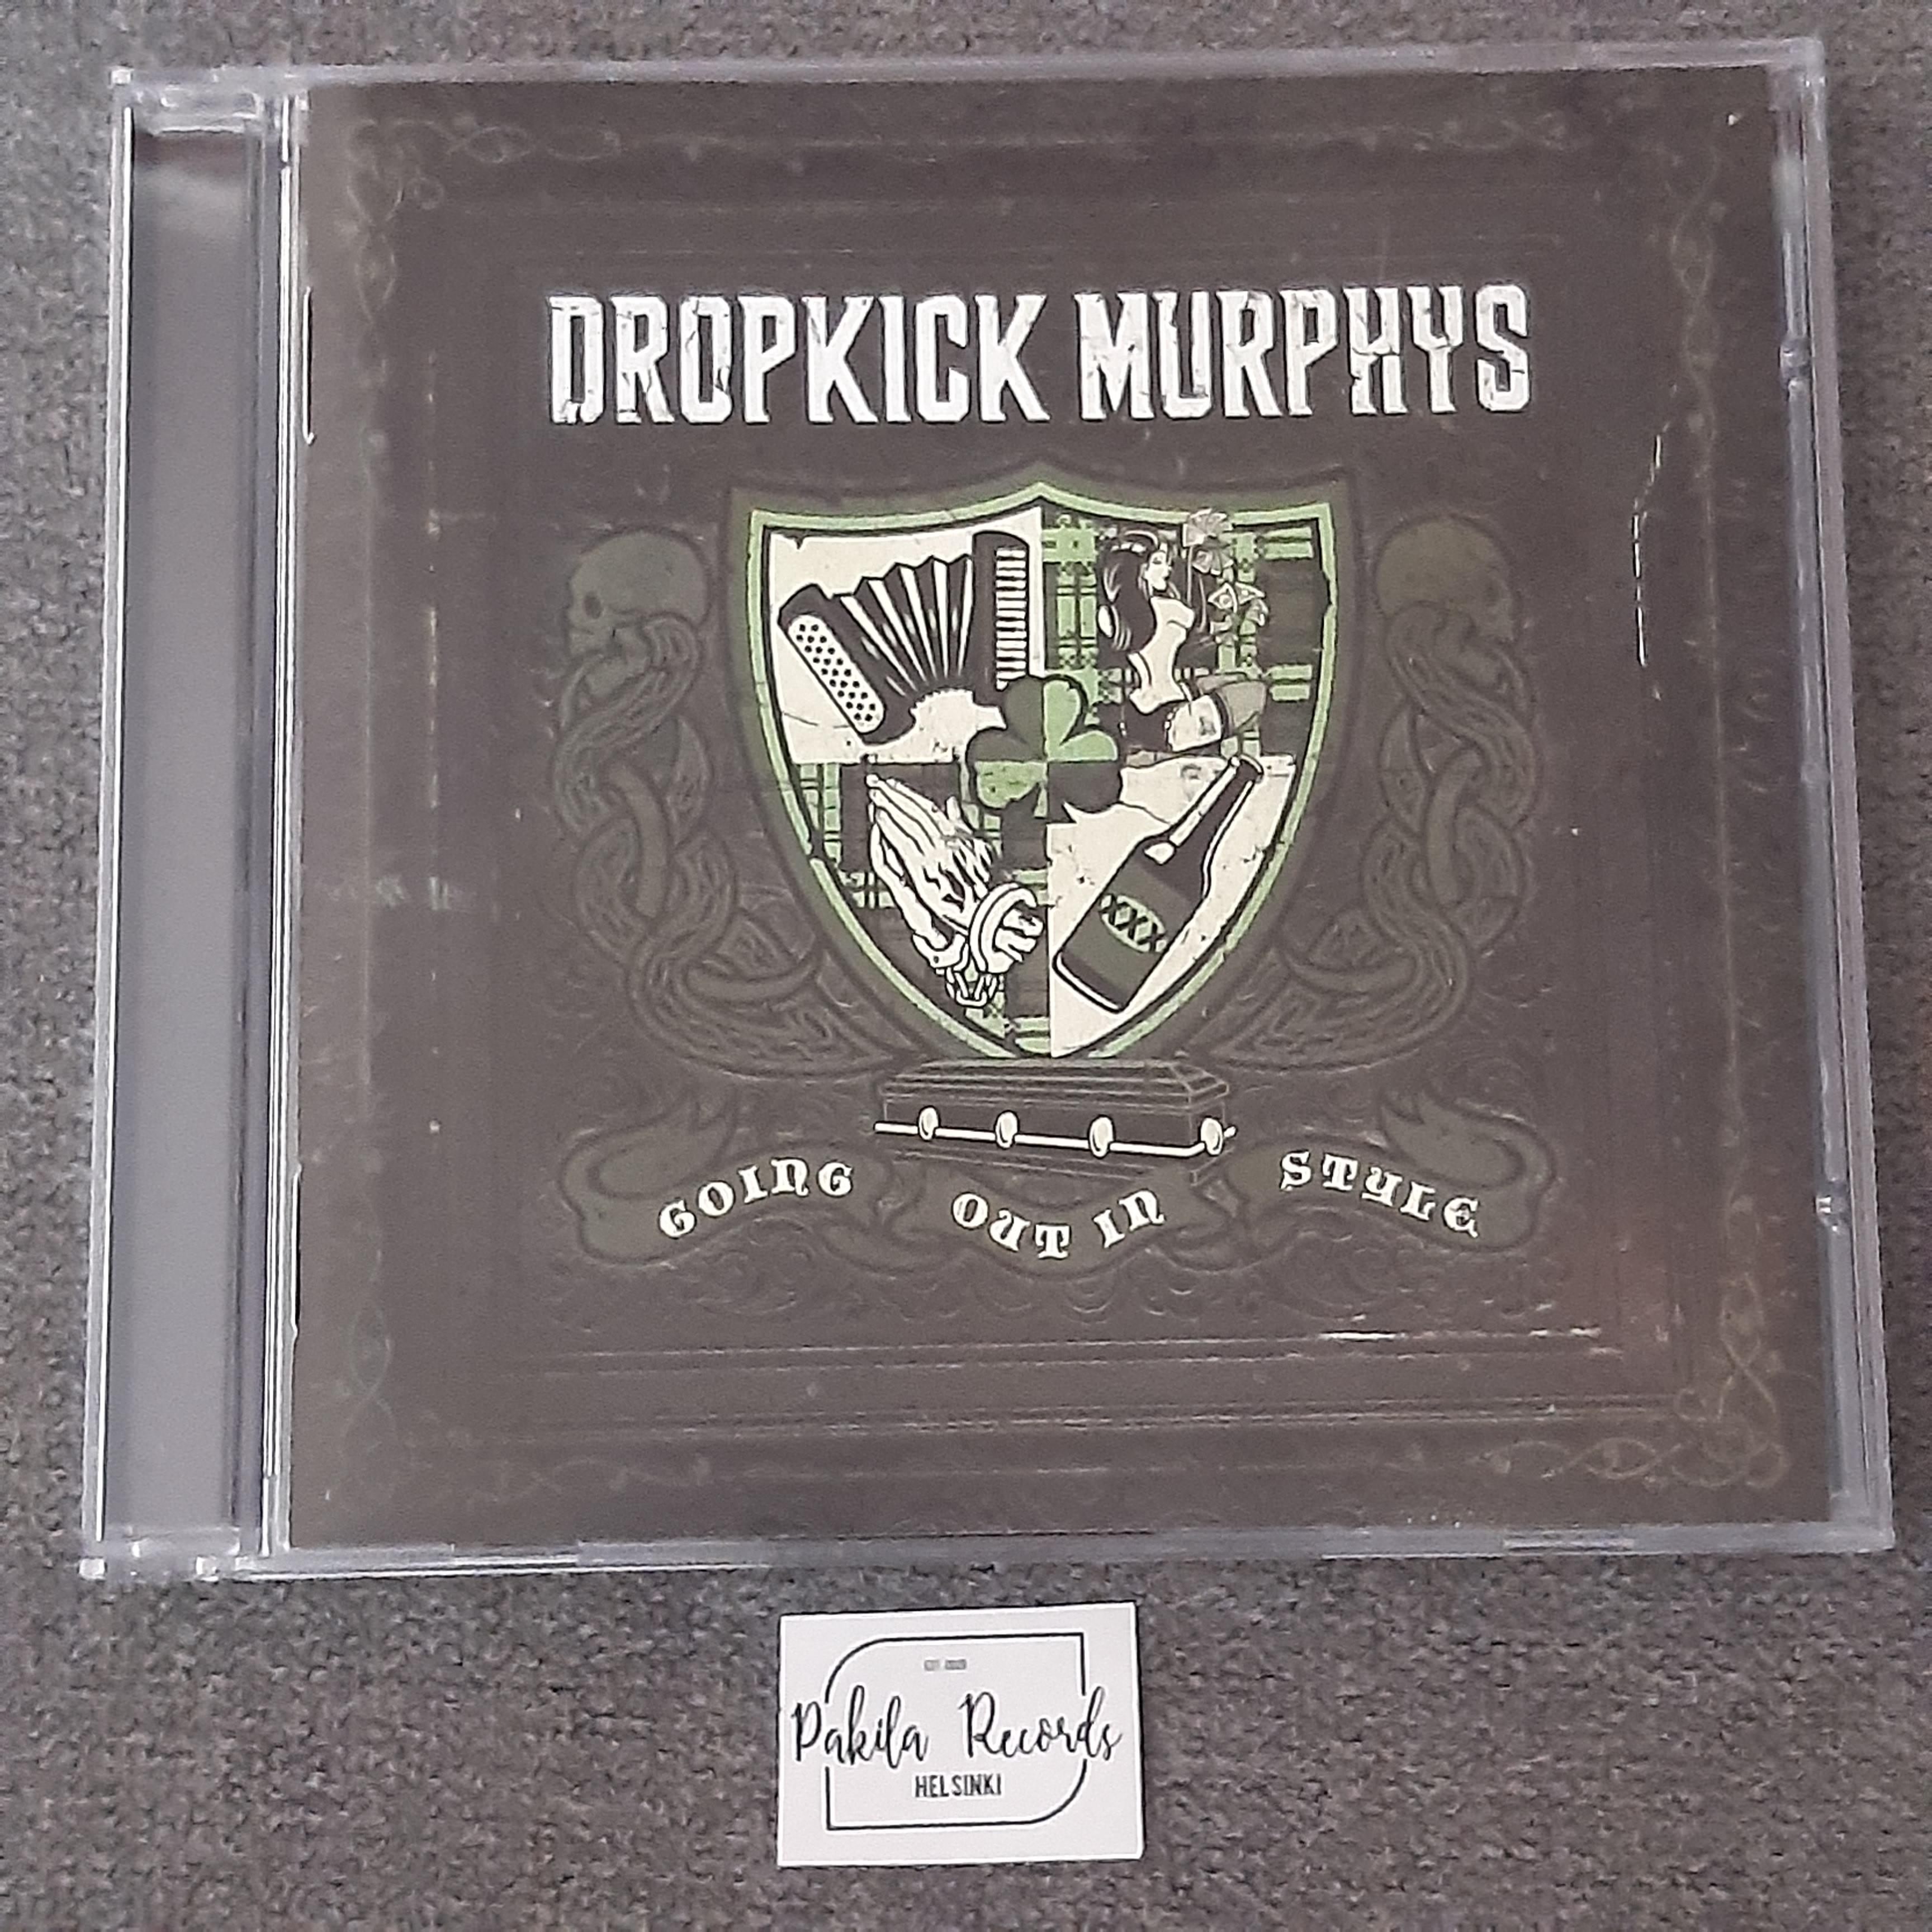 Dropkick Murphys - Going Out In Style - CD (käytetty)